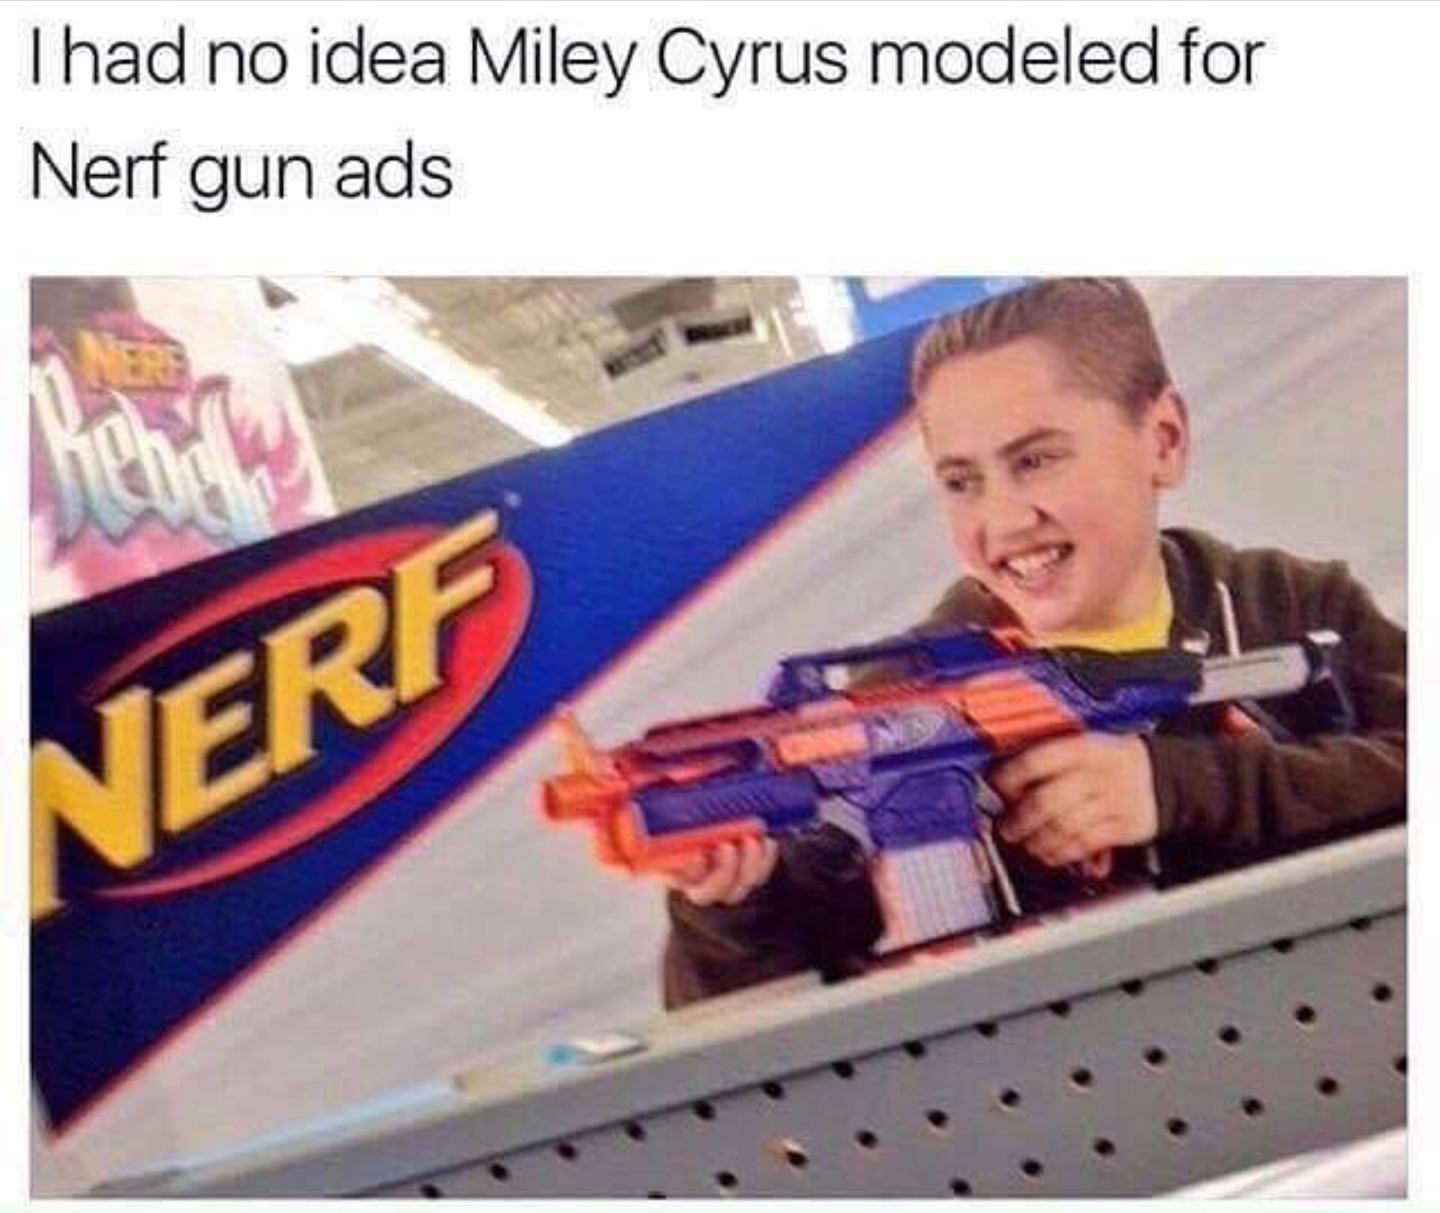 miley cyrus nerf gun - Thad no idea Miley Cyrus modeled for Nerf gun ads Nerf